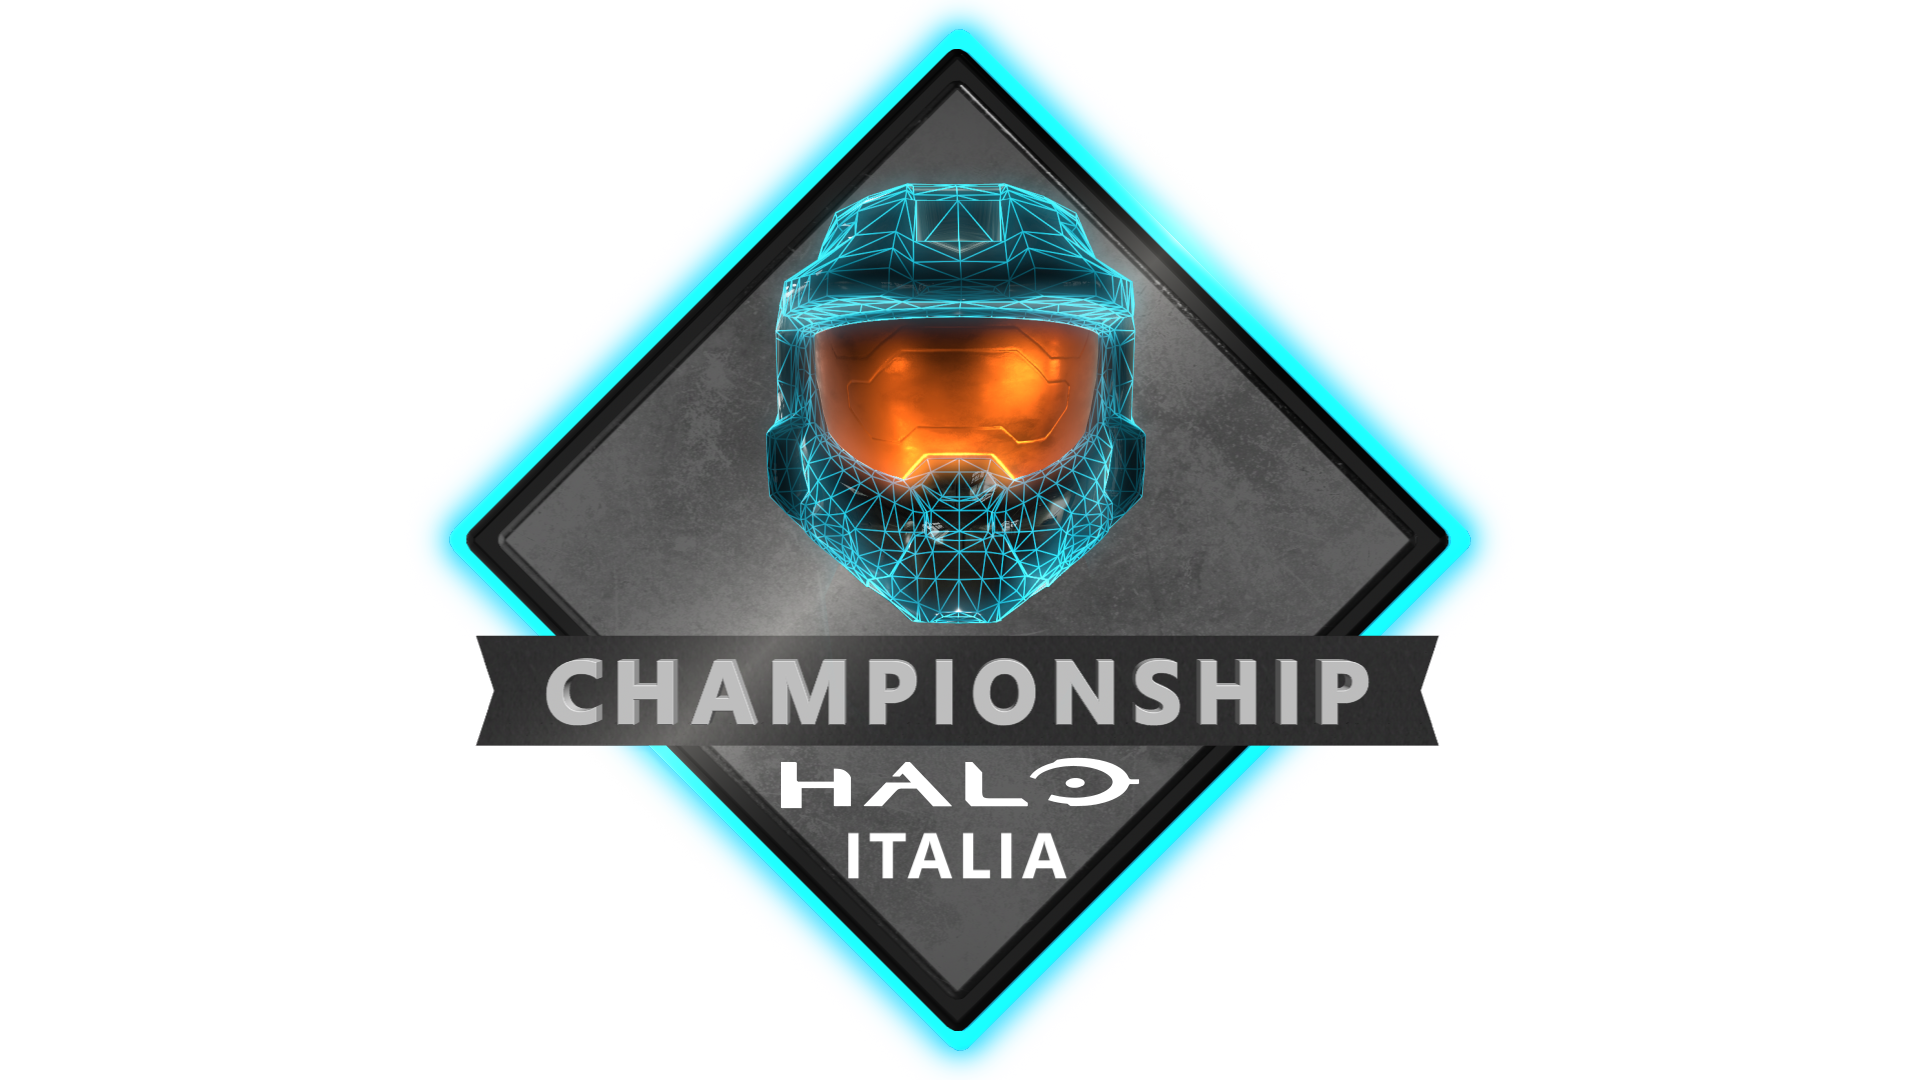 HALO ITALIA CHAMPIONSHIP